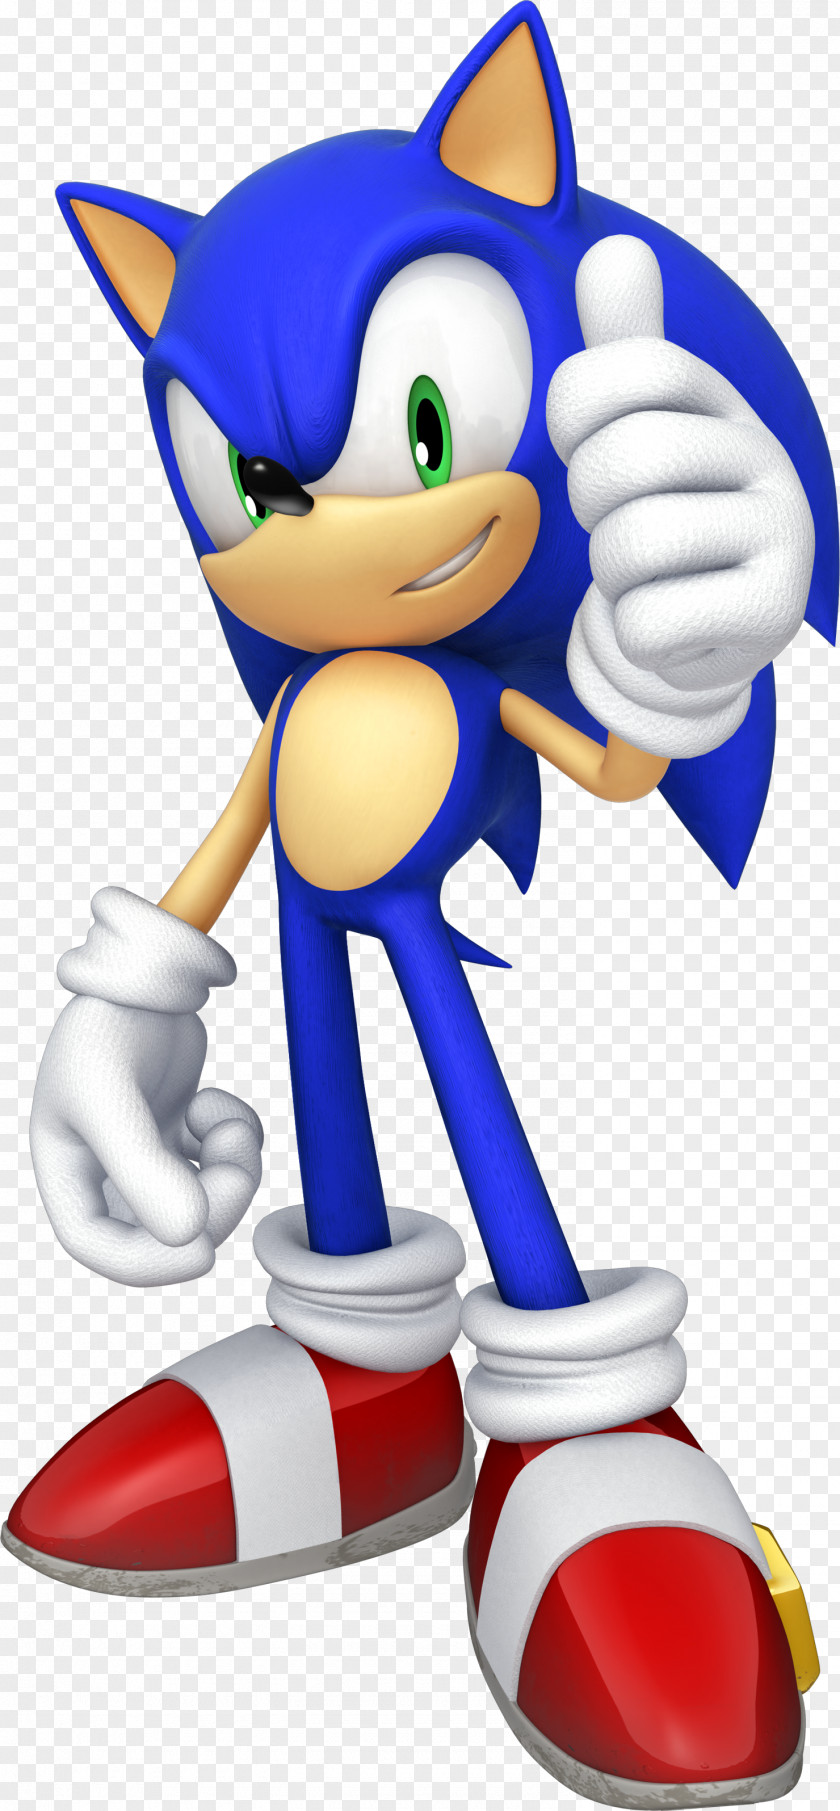 Sonic Best Free Images Clipart SegaSonic The Hedgehog & Sega All-Stars Racing Unleashed Colors PNG